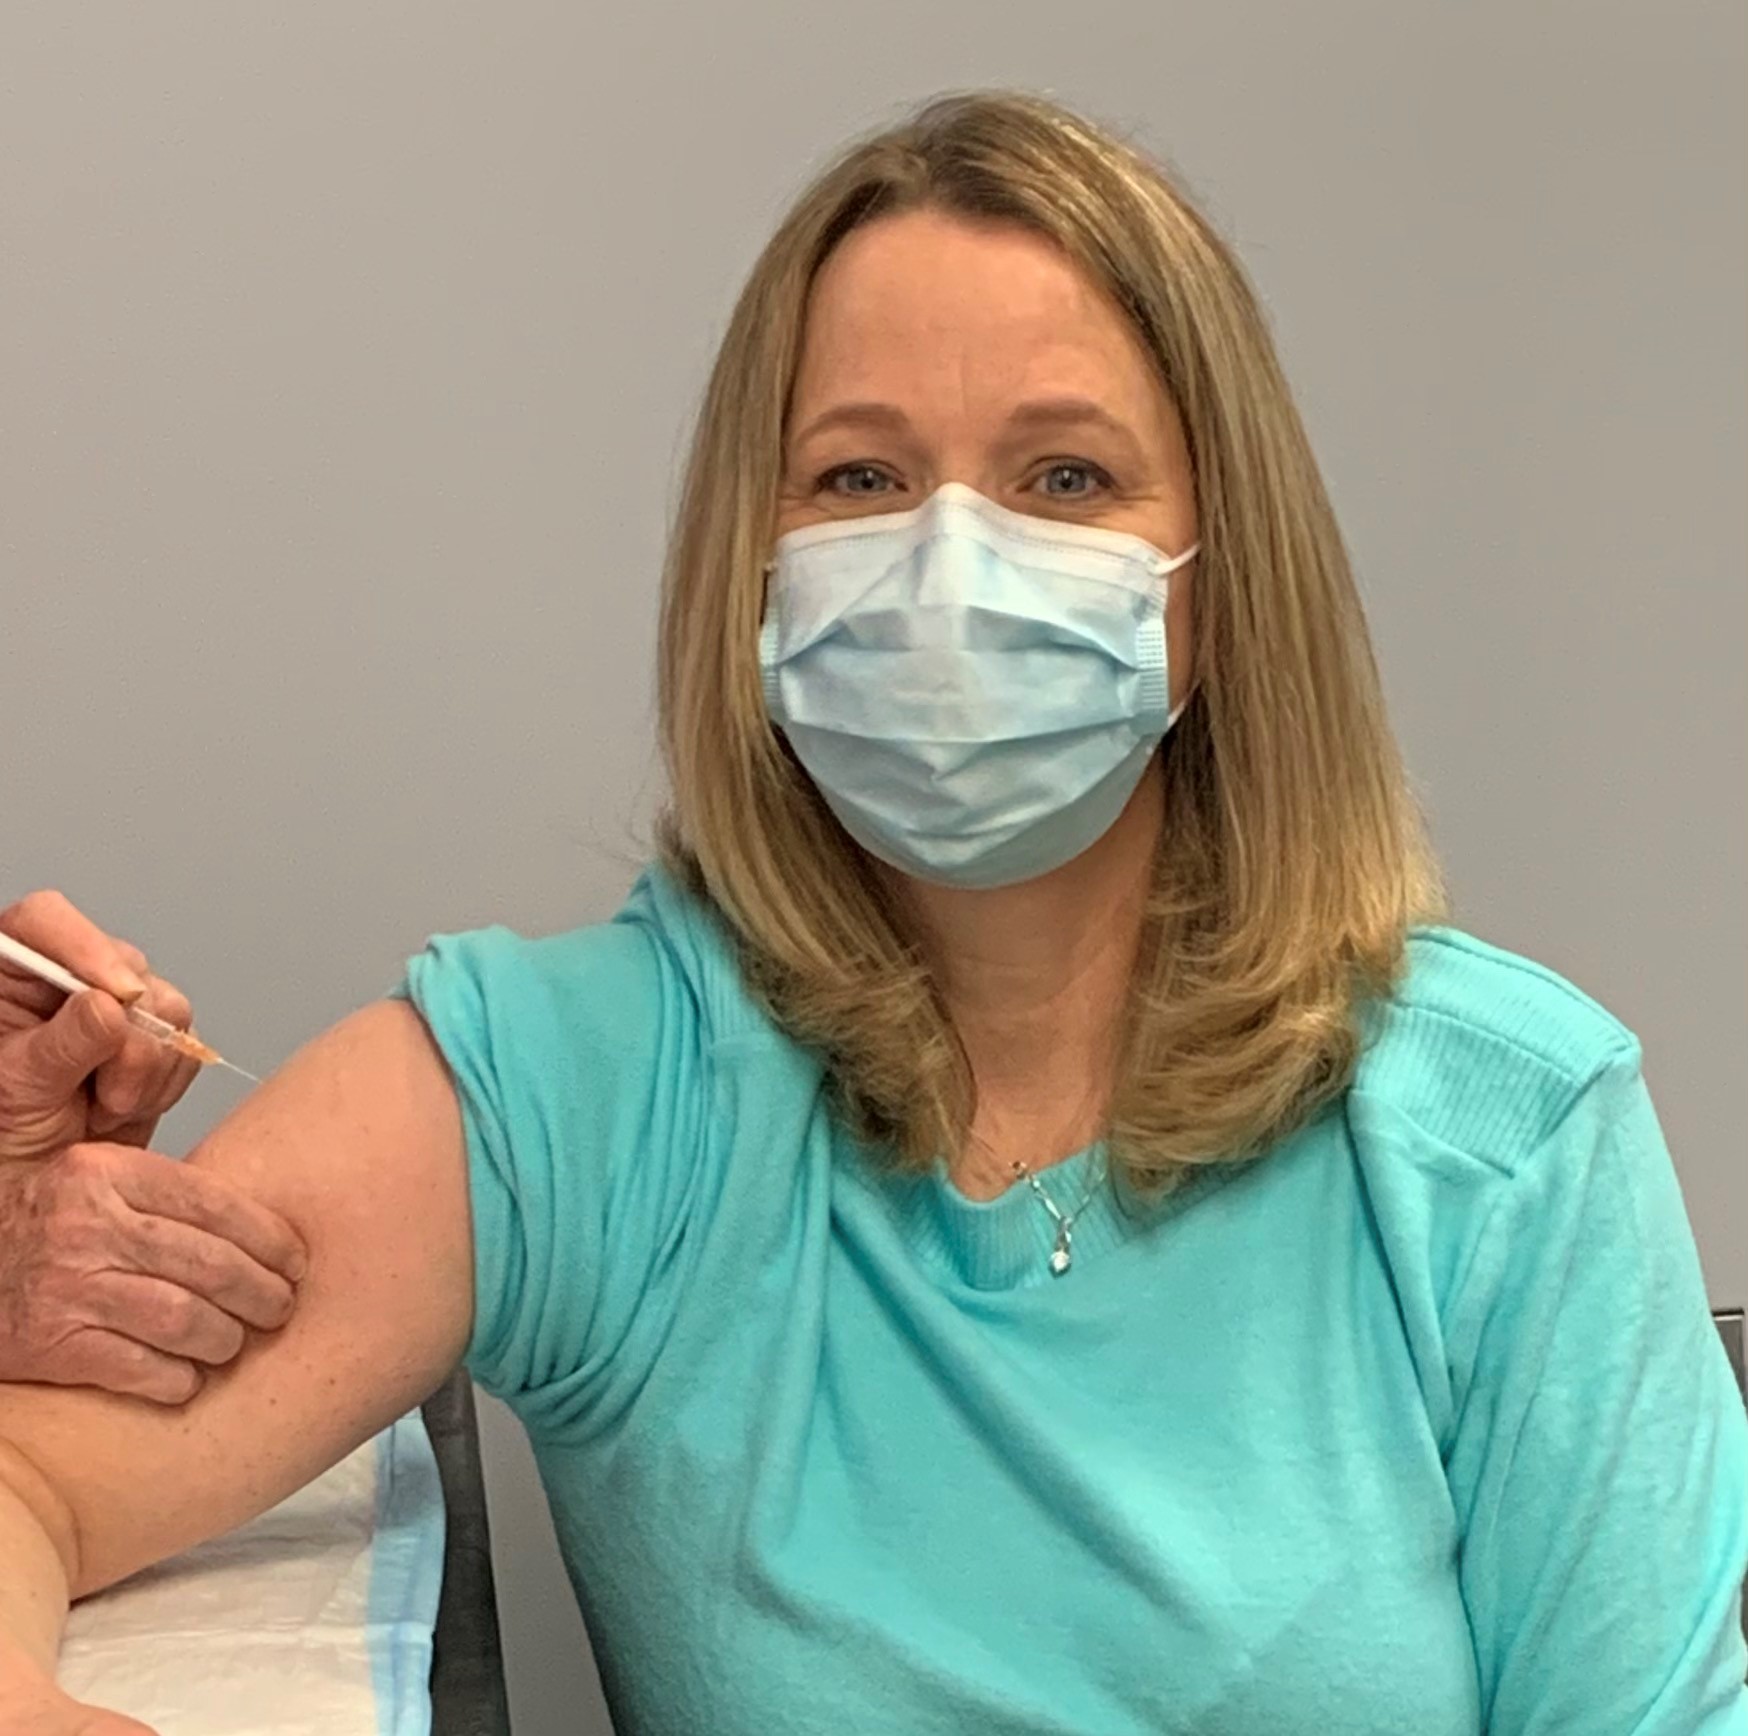 Dr. McKnight receiving the COVID-19 vaccine